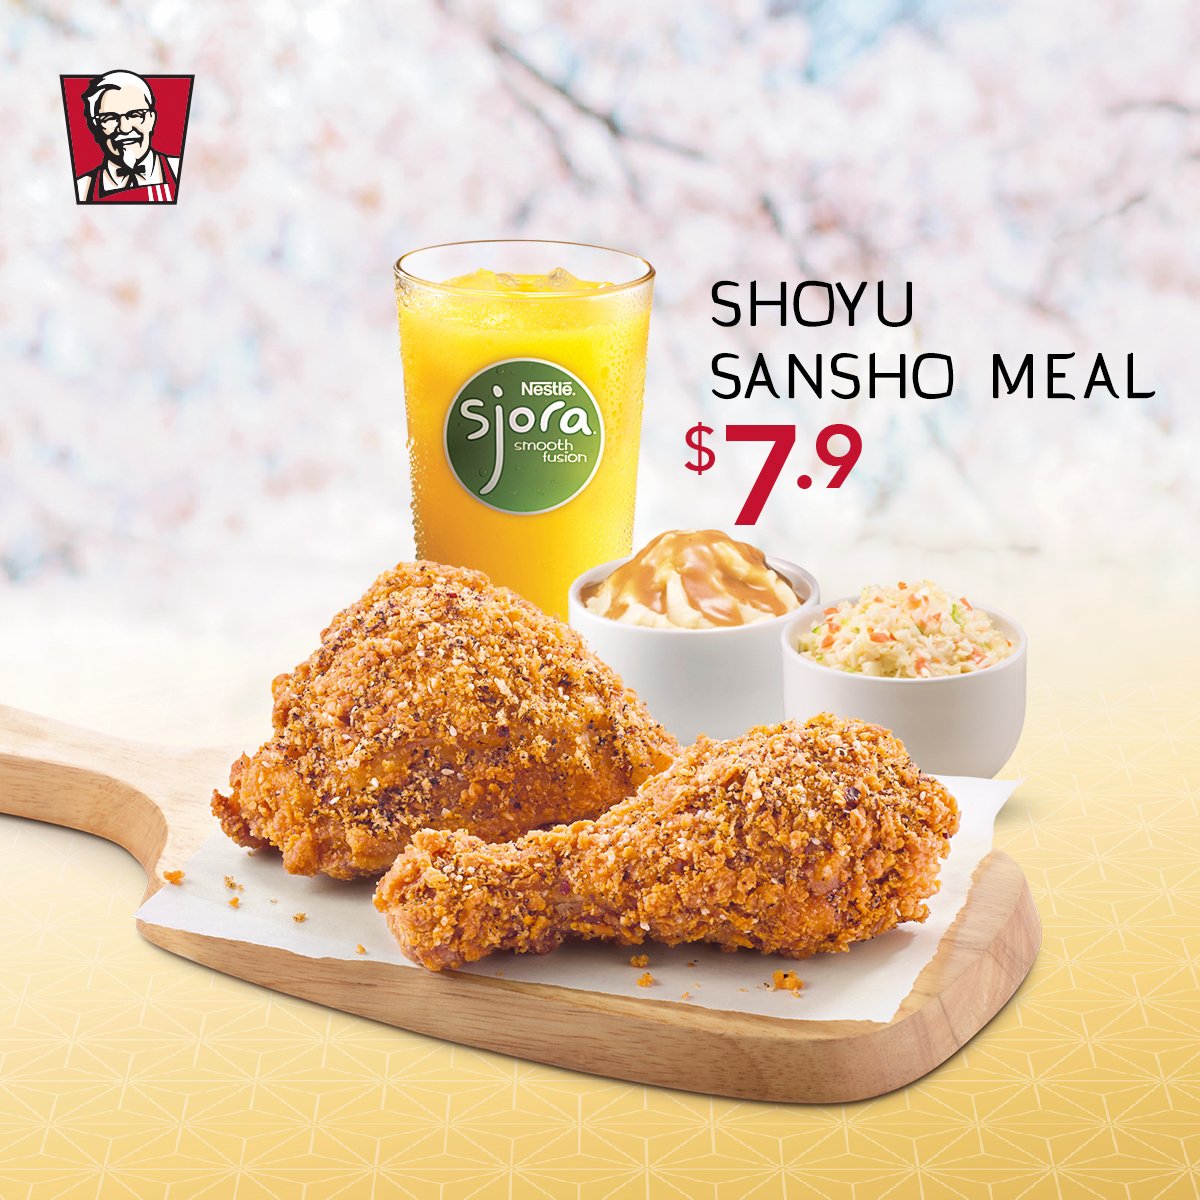 Experience an #Oishiok taste of Japan with our Shoyu Sansho Meal at only $7.90! See more at: bit.ly/2mYguvD #ShoyuSanshoKFC #kfcsg